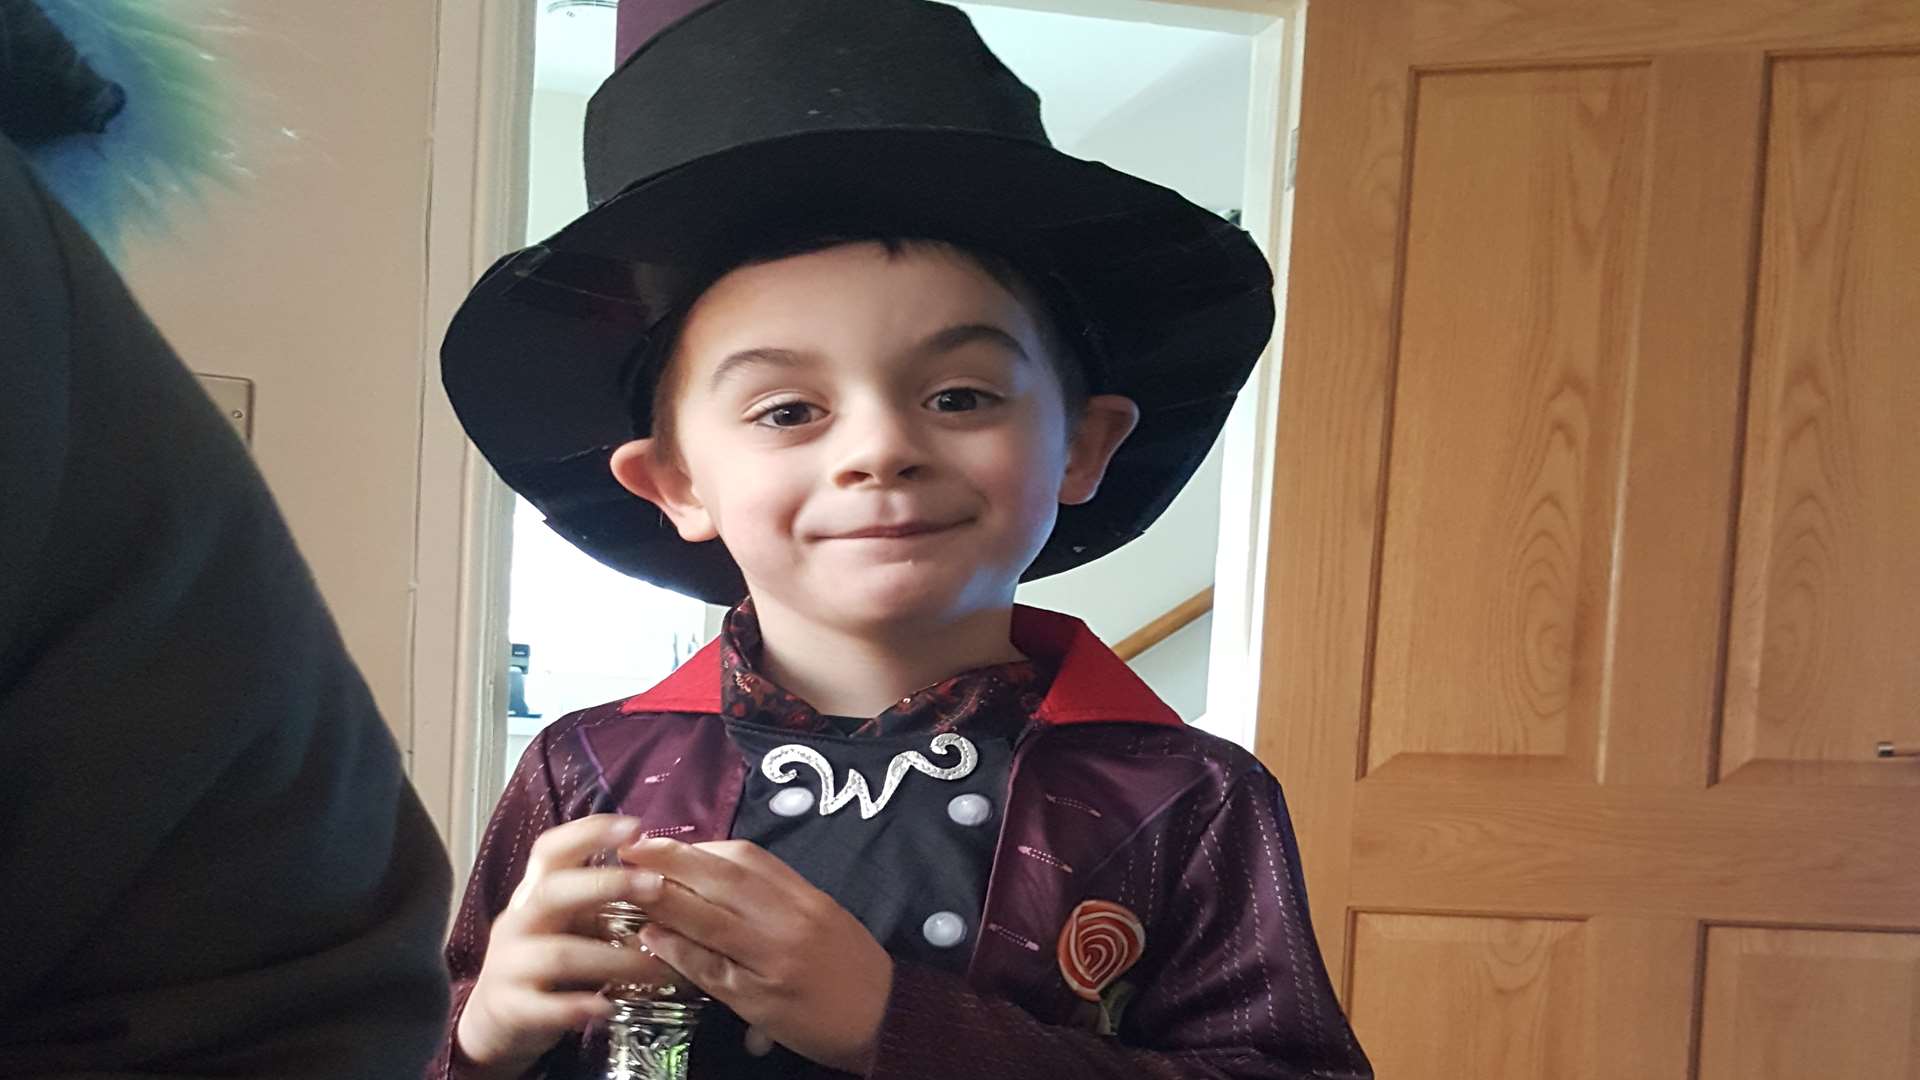 Seth Davey dressed as Willy Wonka. His school, Callis Grange nursery and infant school in St Peters, broadstairs are honouring Roald Dahl